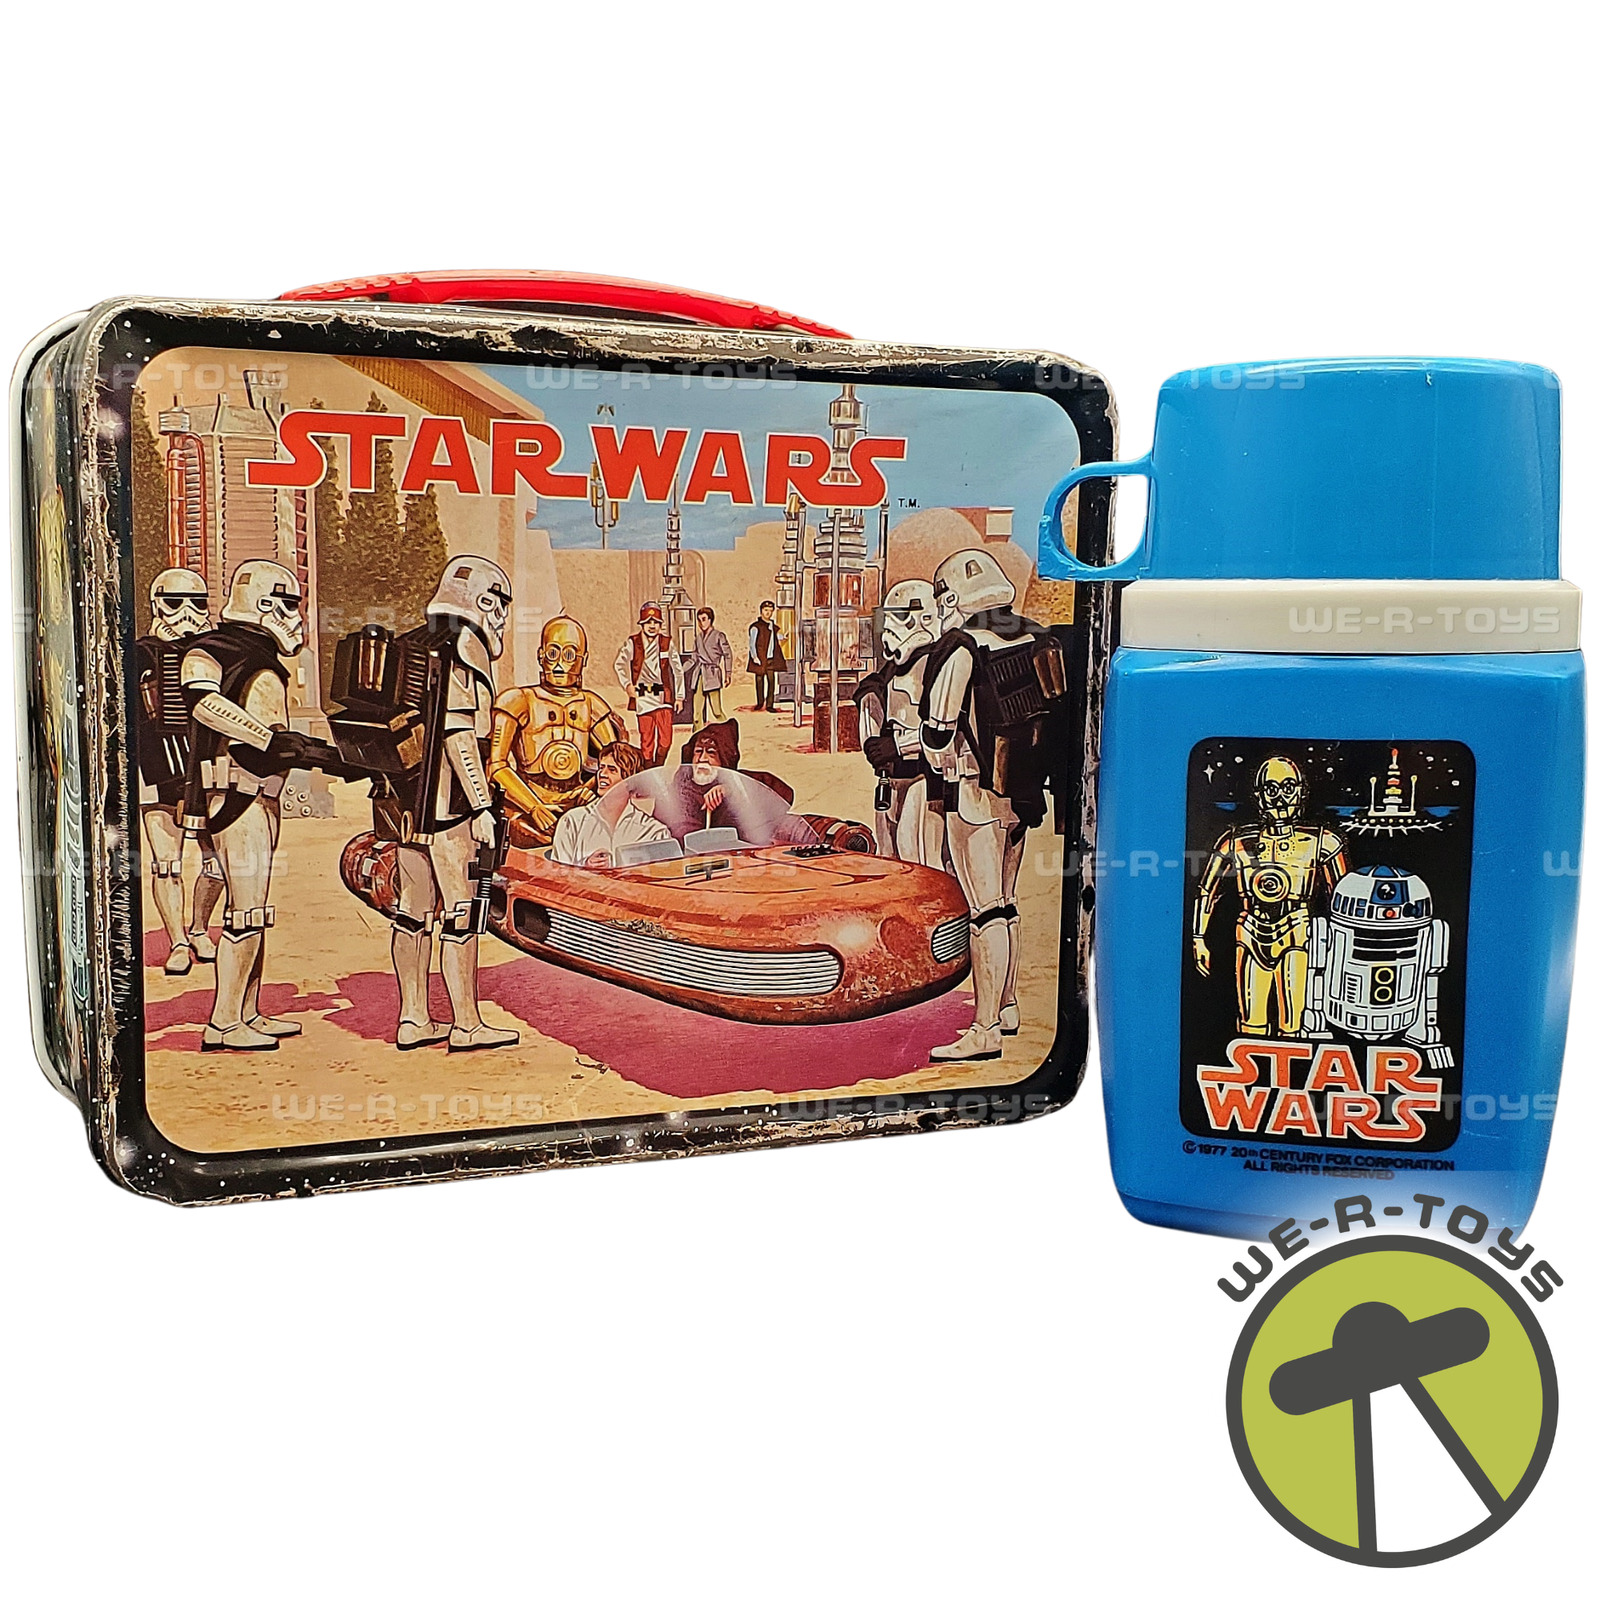 Star Wars Metal Lunchbox Mos Eisley with Original Thermos 1977 Vintage USED